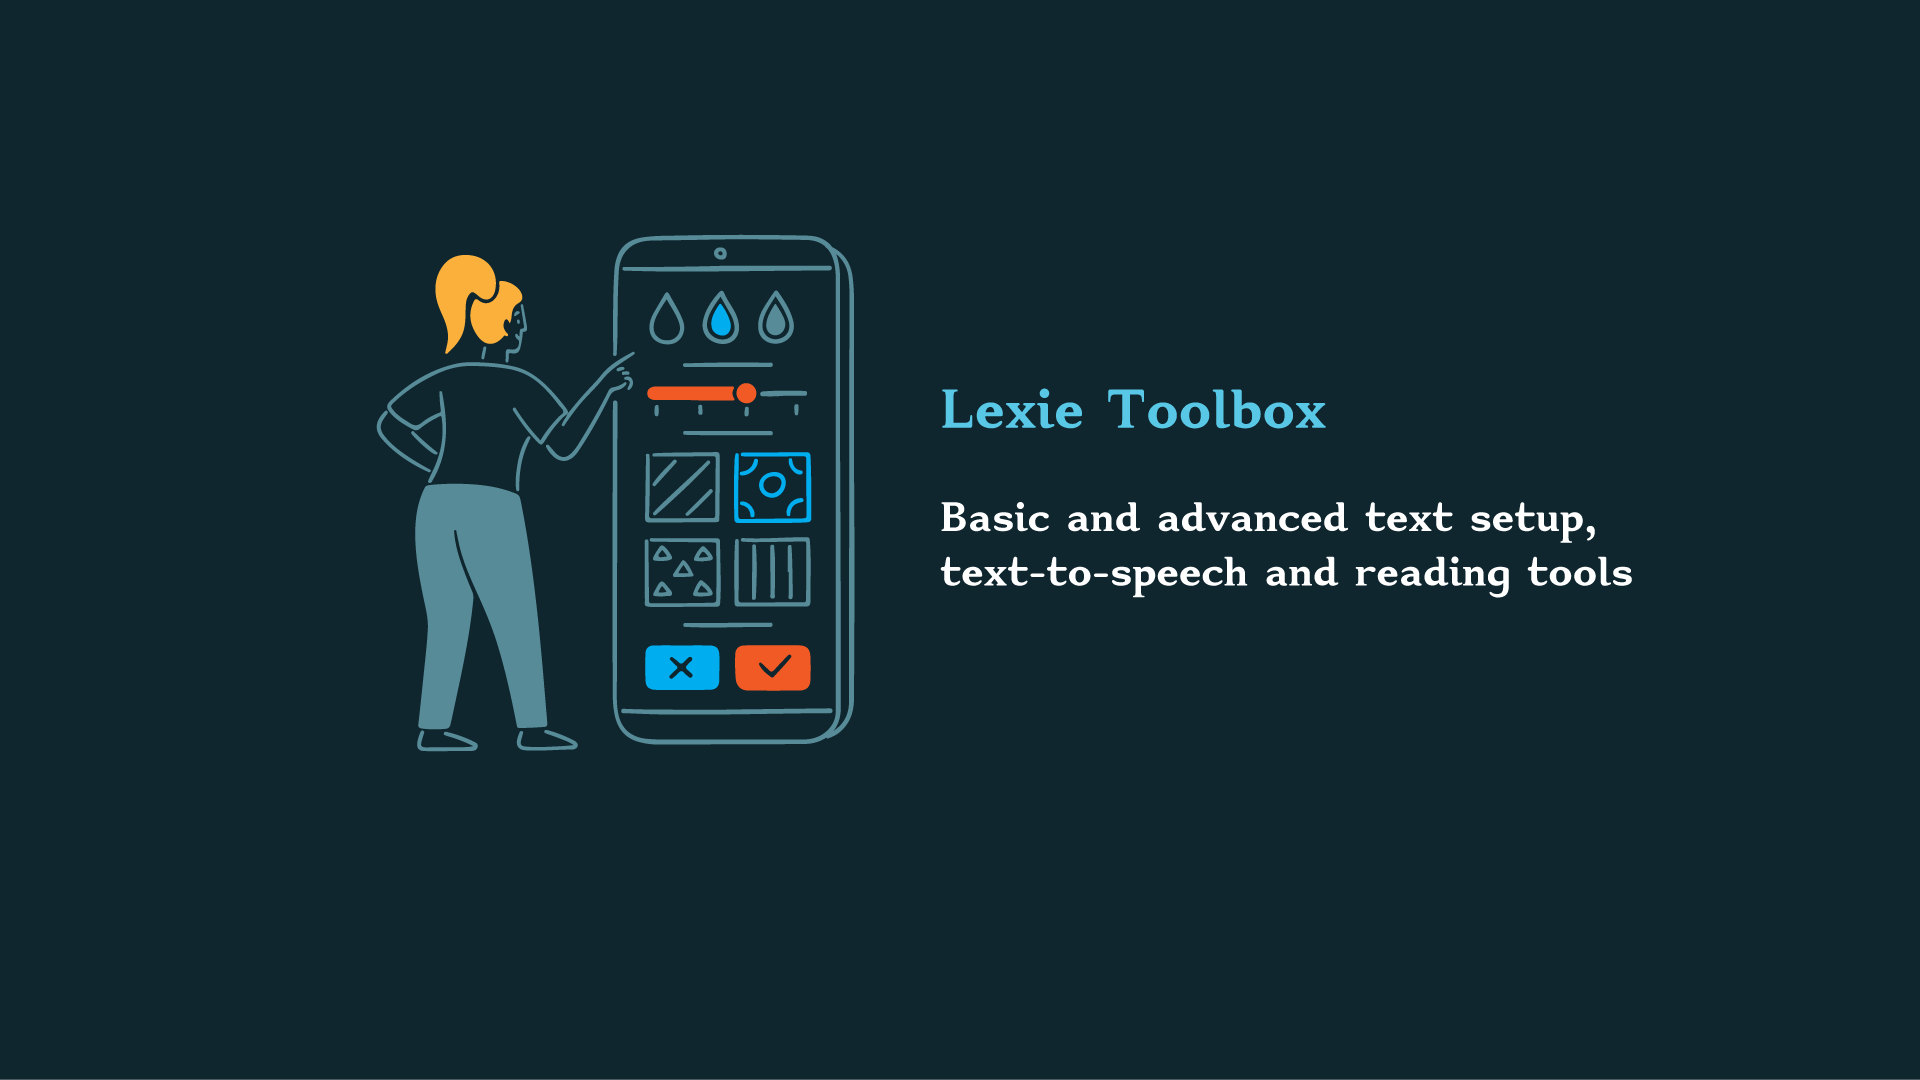 Dyslexia apps - Lexie powerful toolbox for enjoyable reading